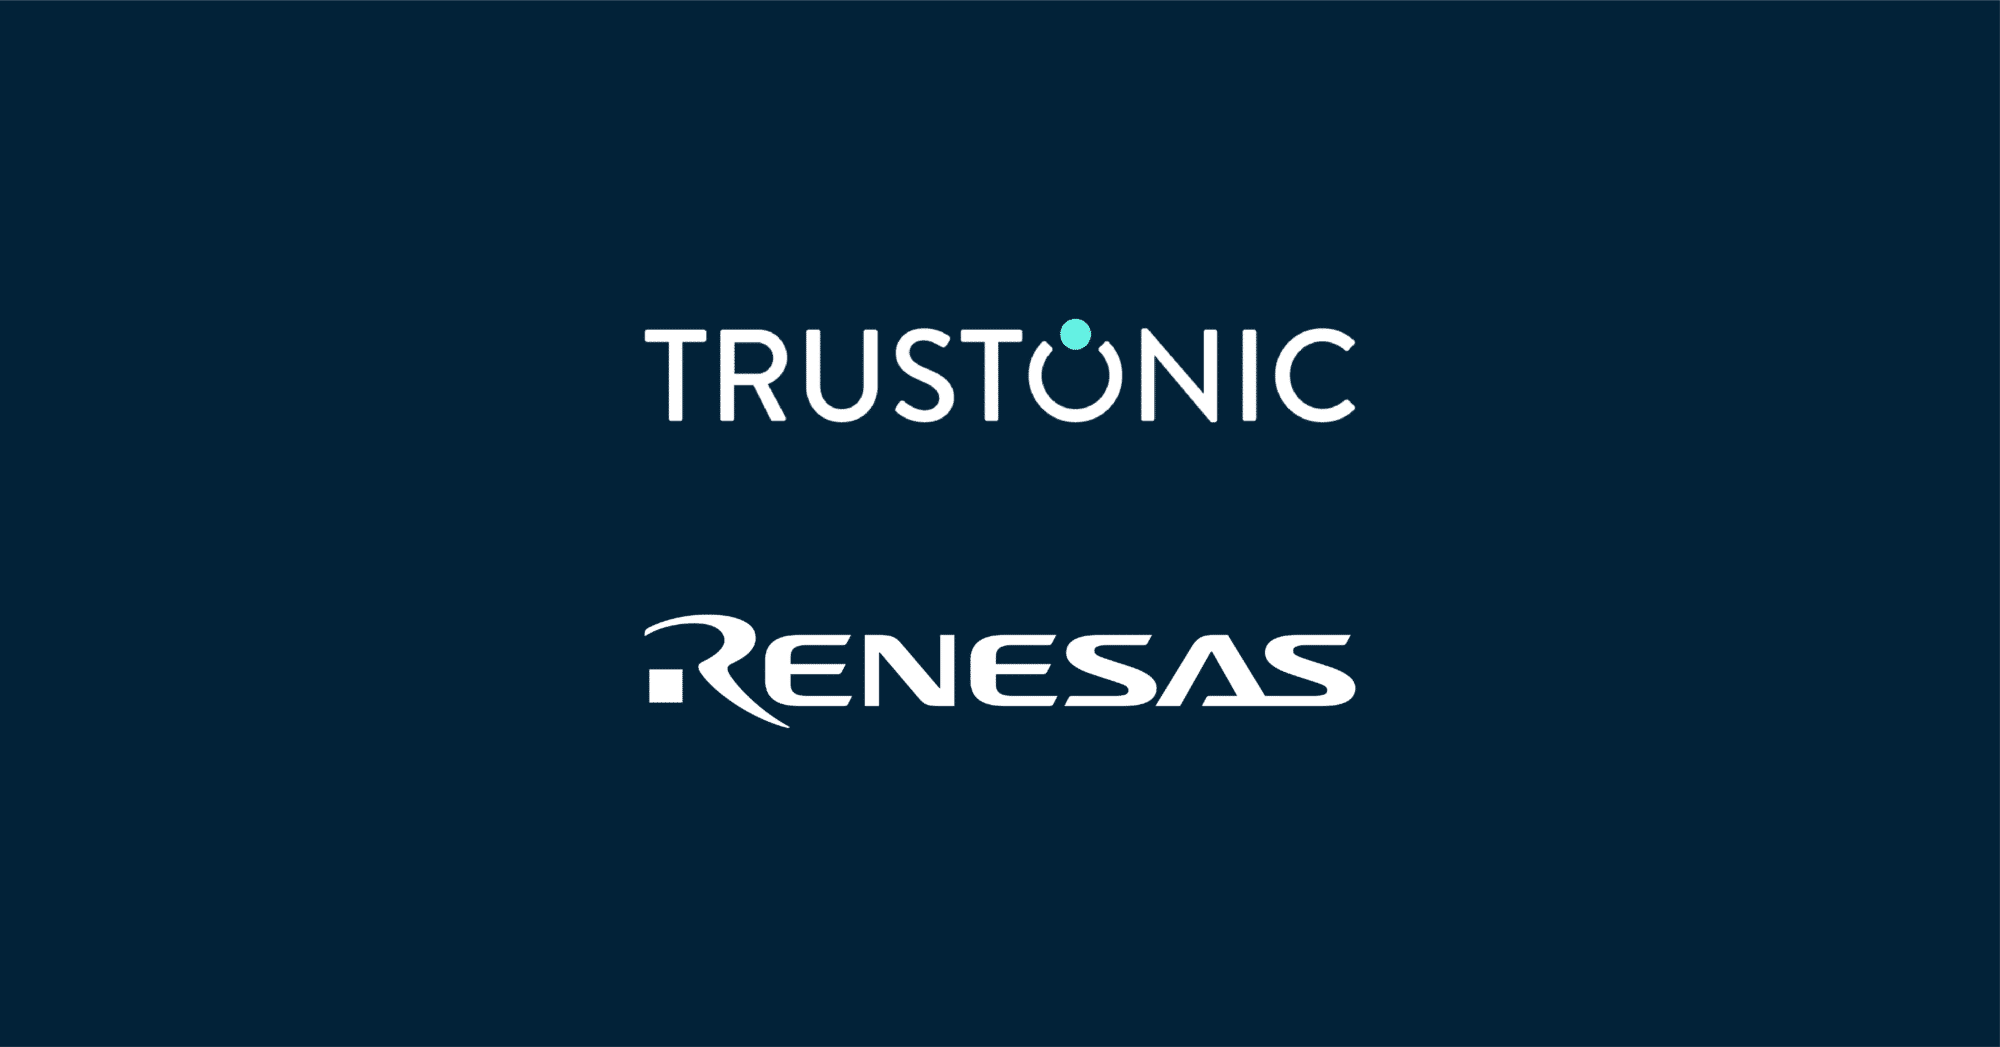 Trustonic and Renesas Partnership